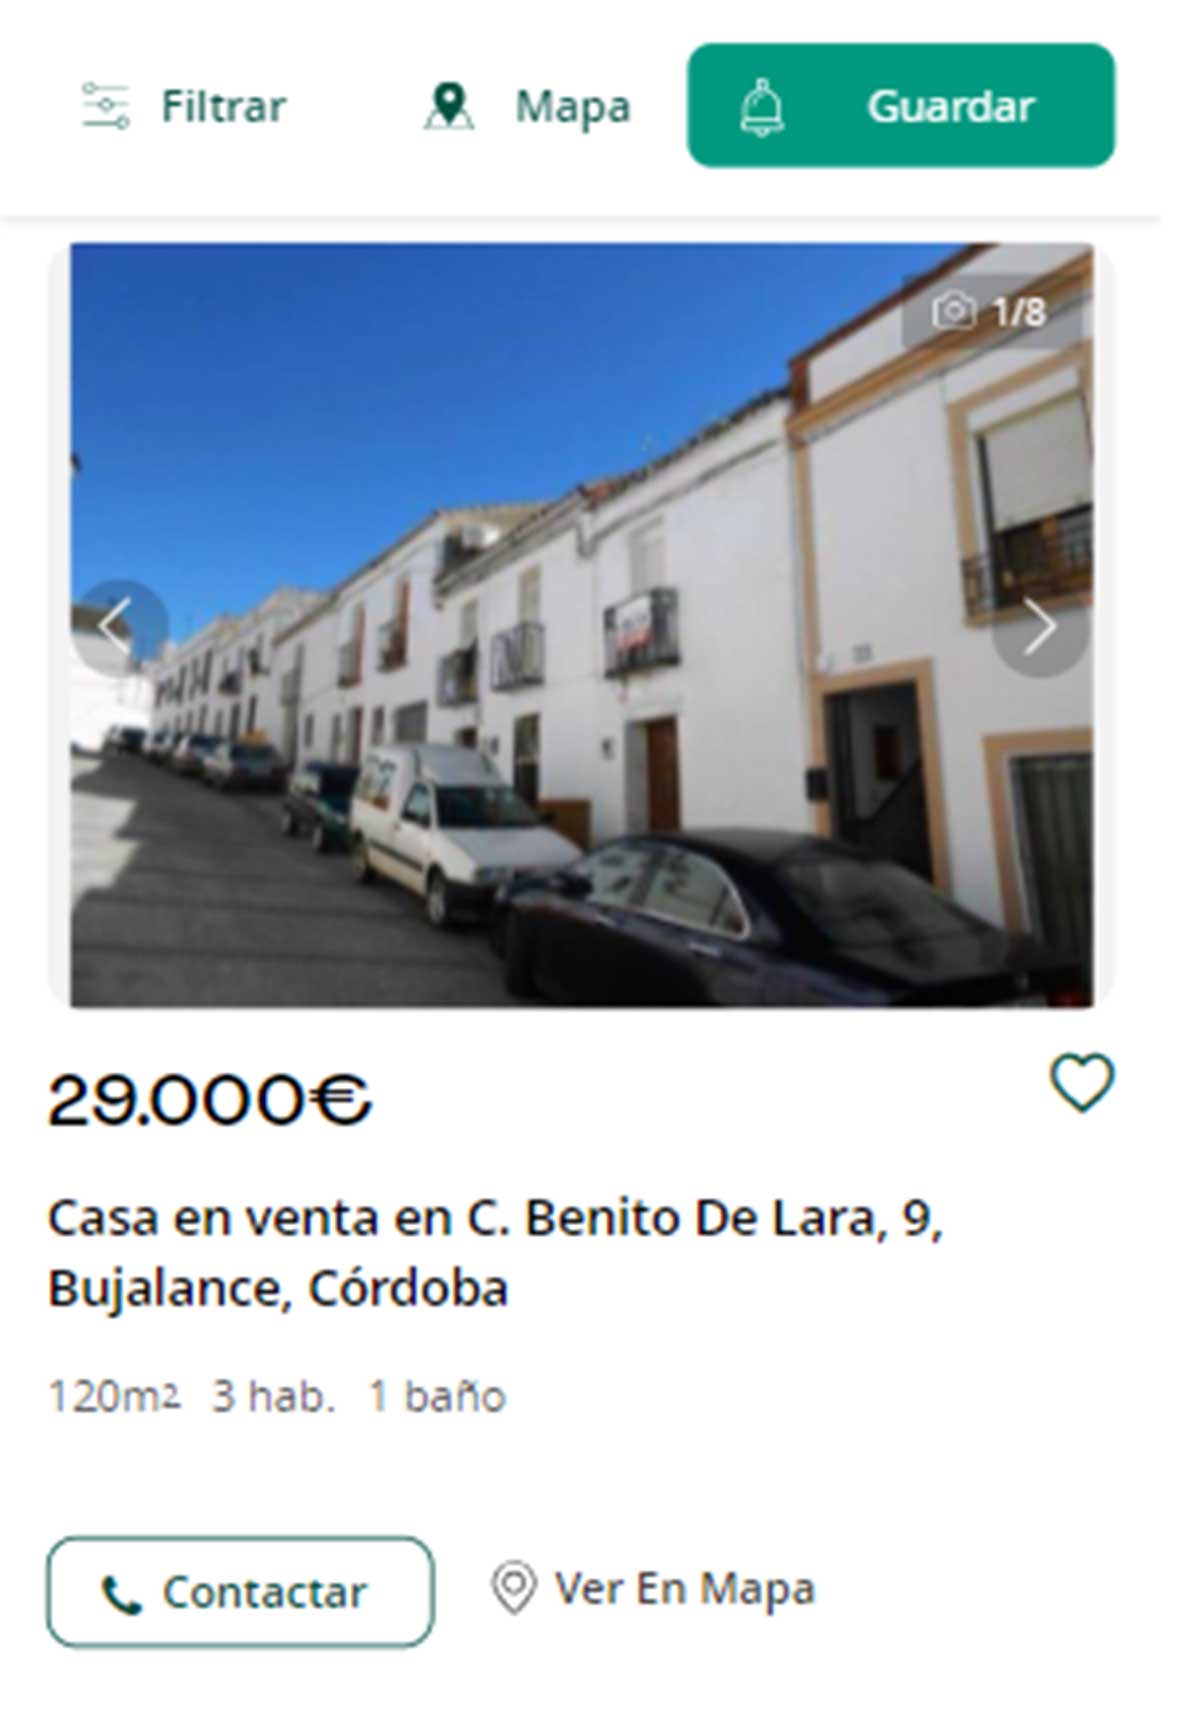 Piso a la venta en Córdoba por 29.000 euros